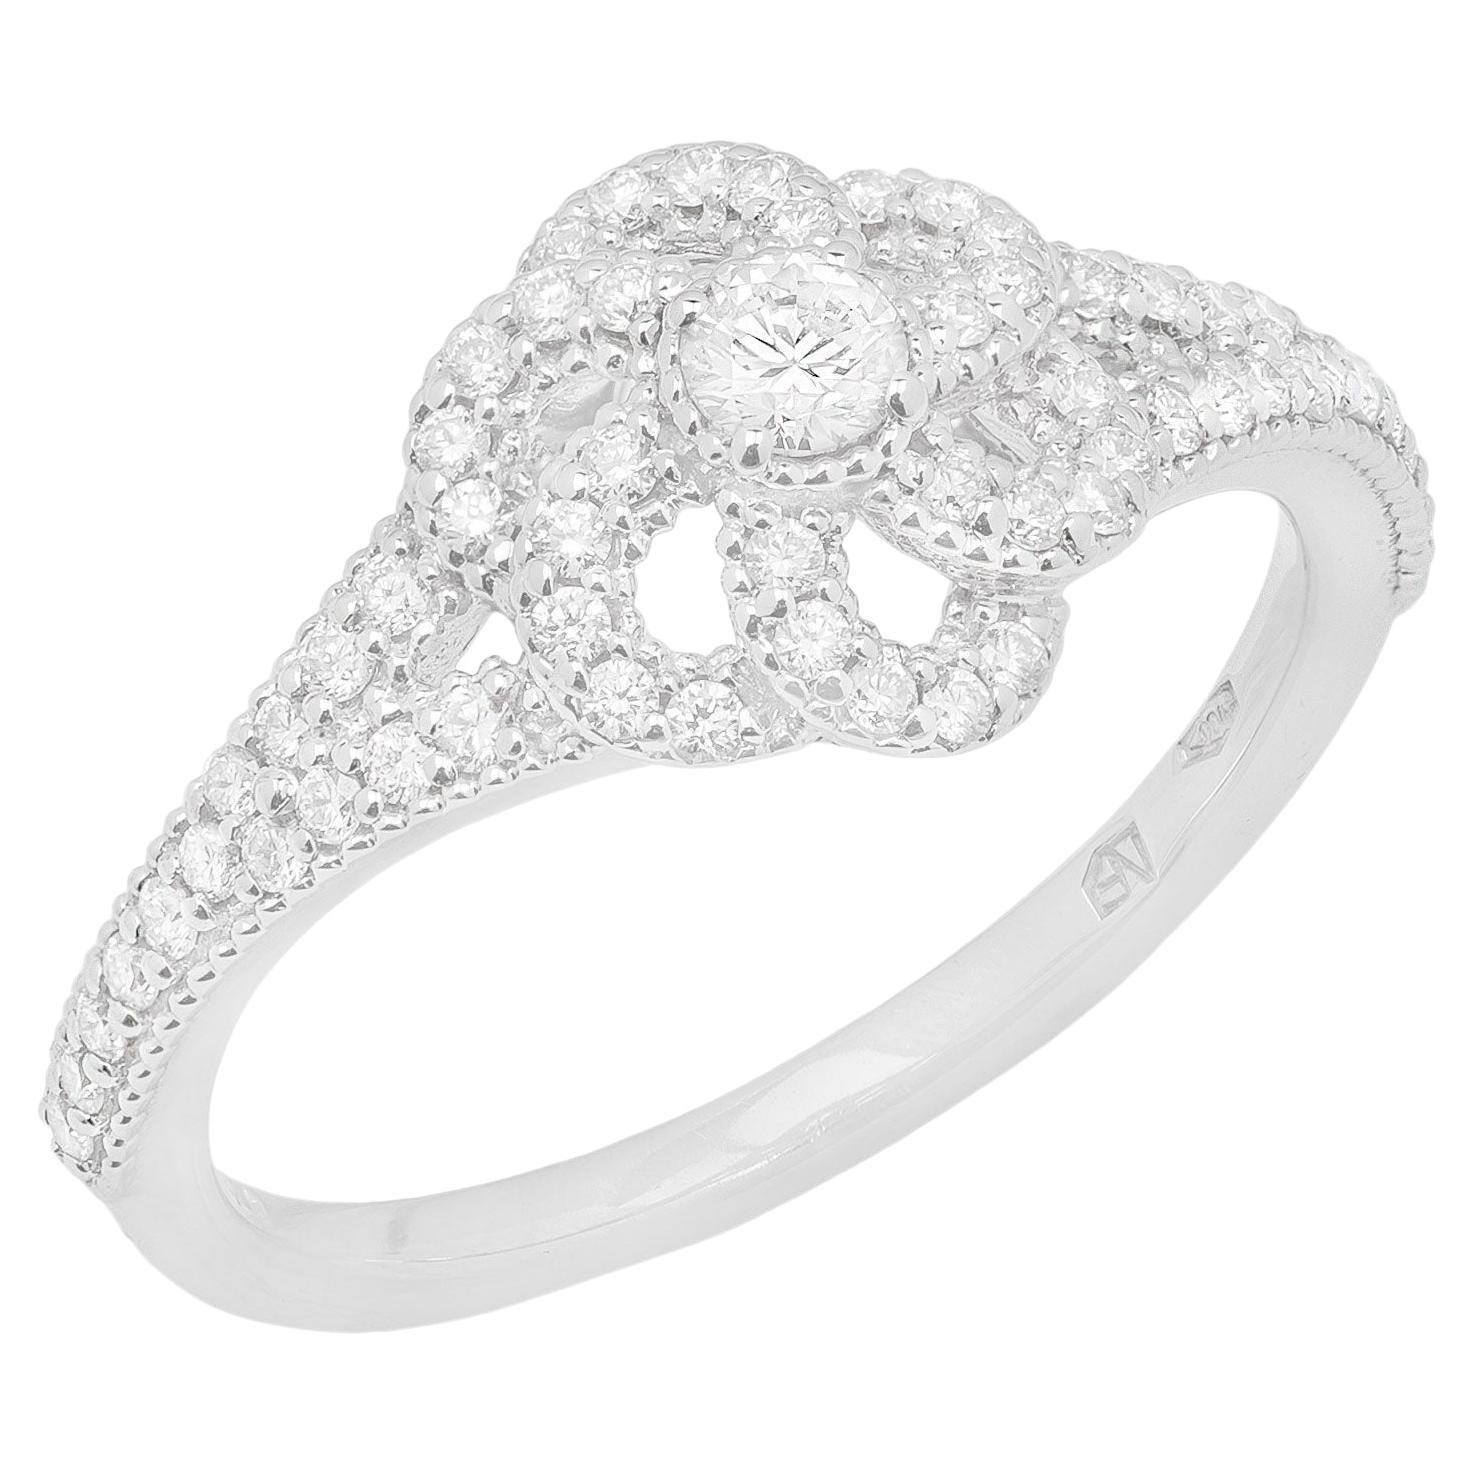 White Diamonds and 18k White Gold Engagement Ring